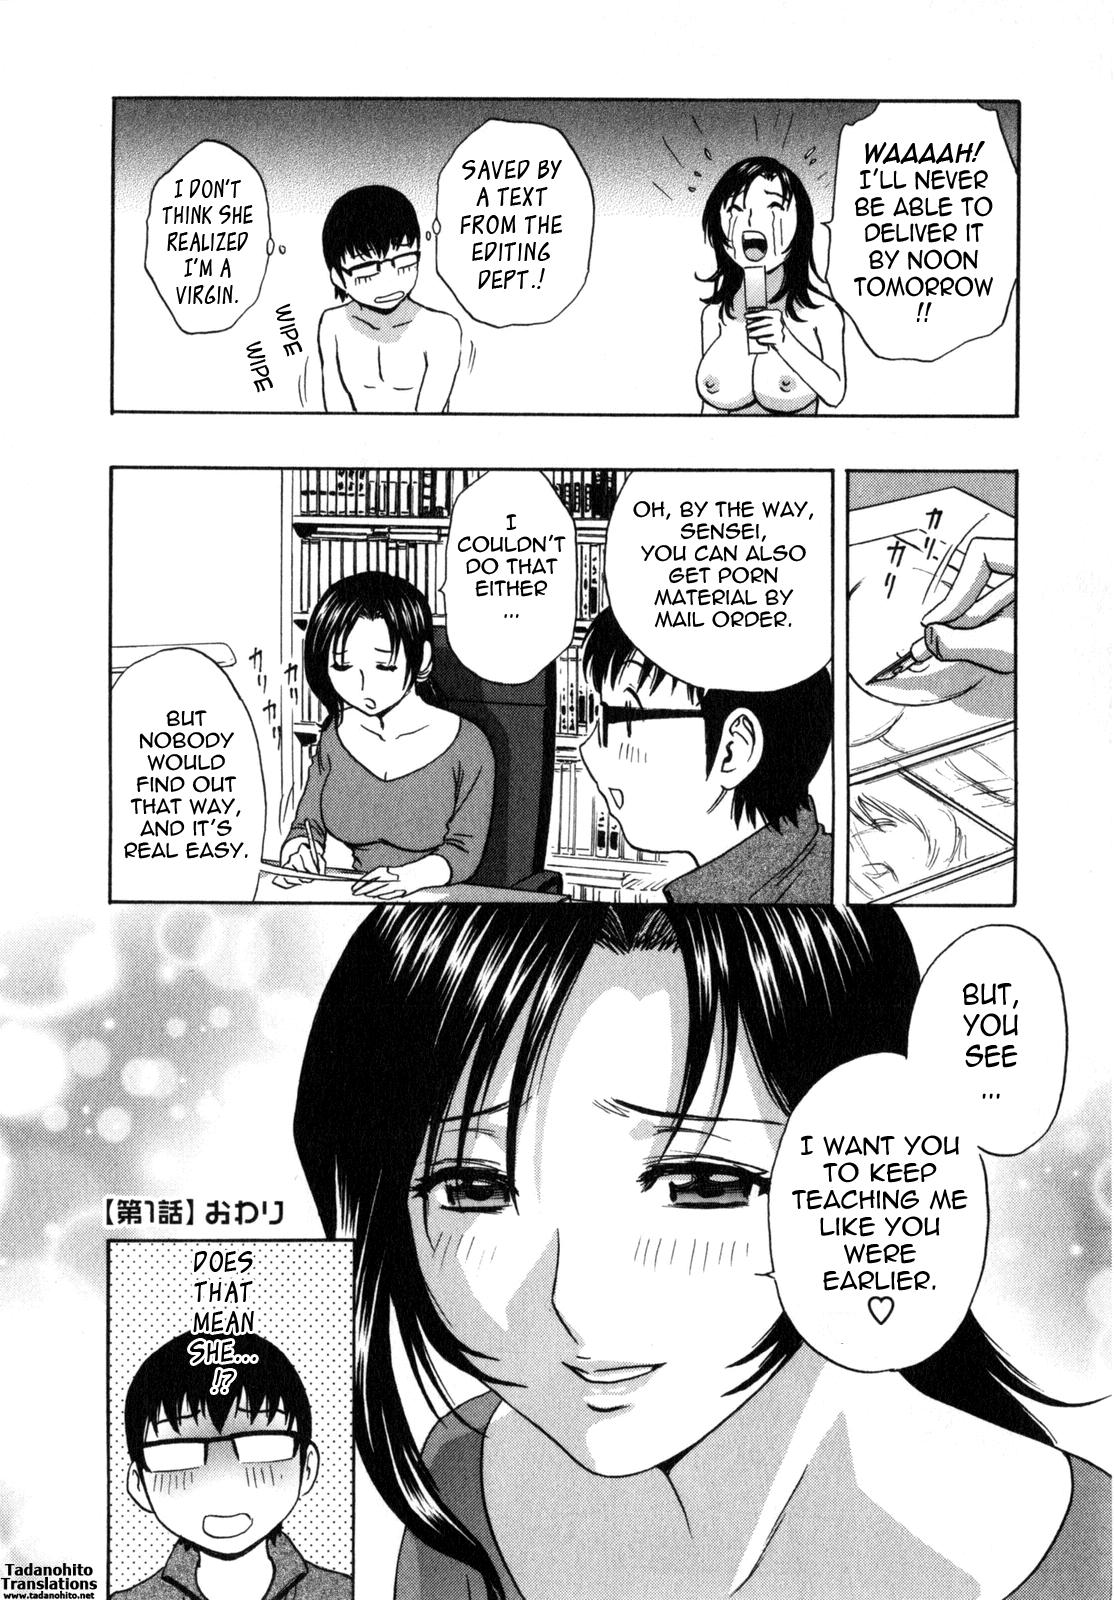 [Hidemaru] Life with Married Women Just Like a Manga 1 - Ch. 1-2 [English] {Tadanohito} 24